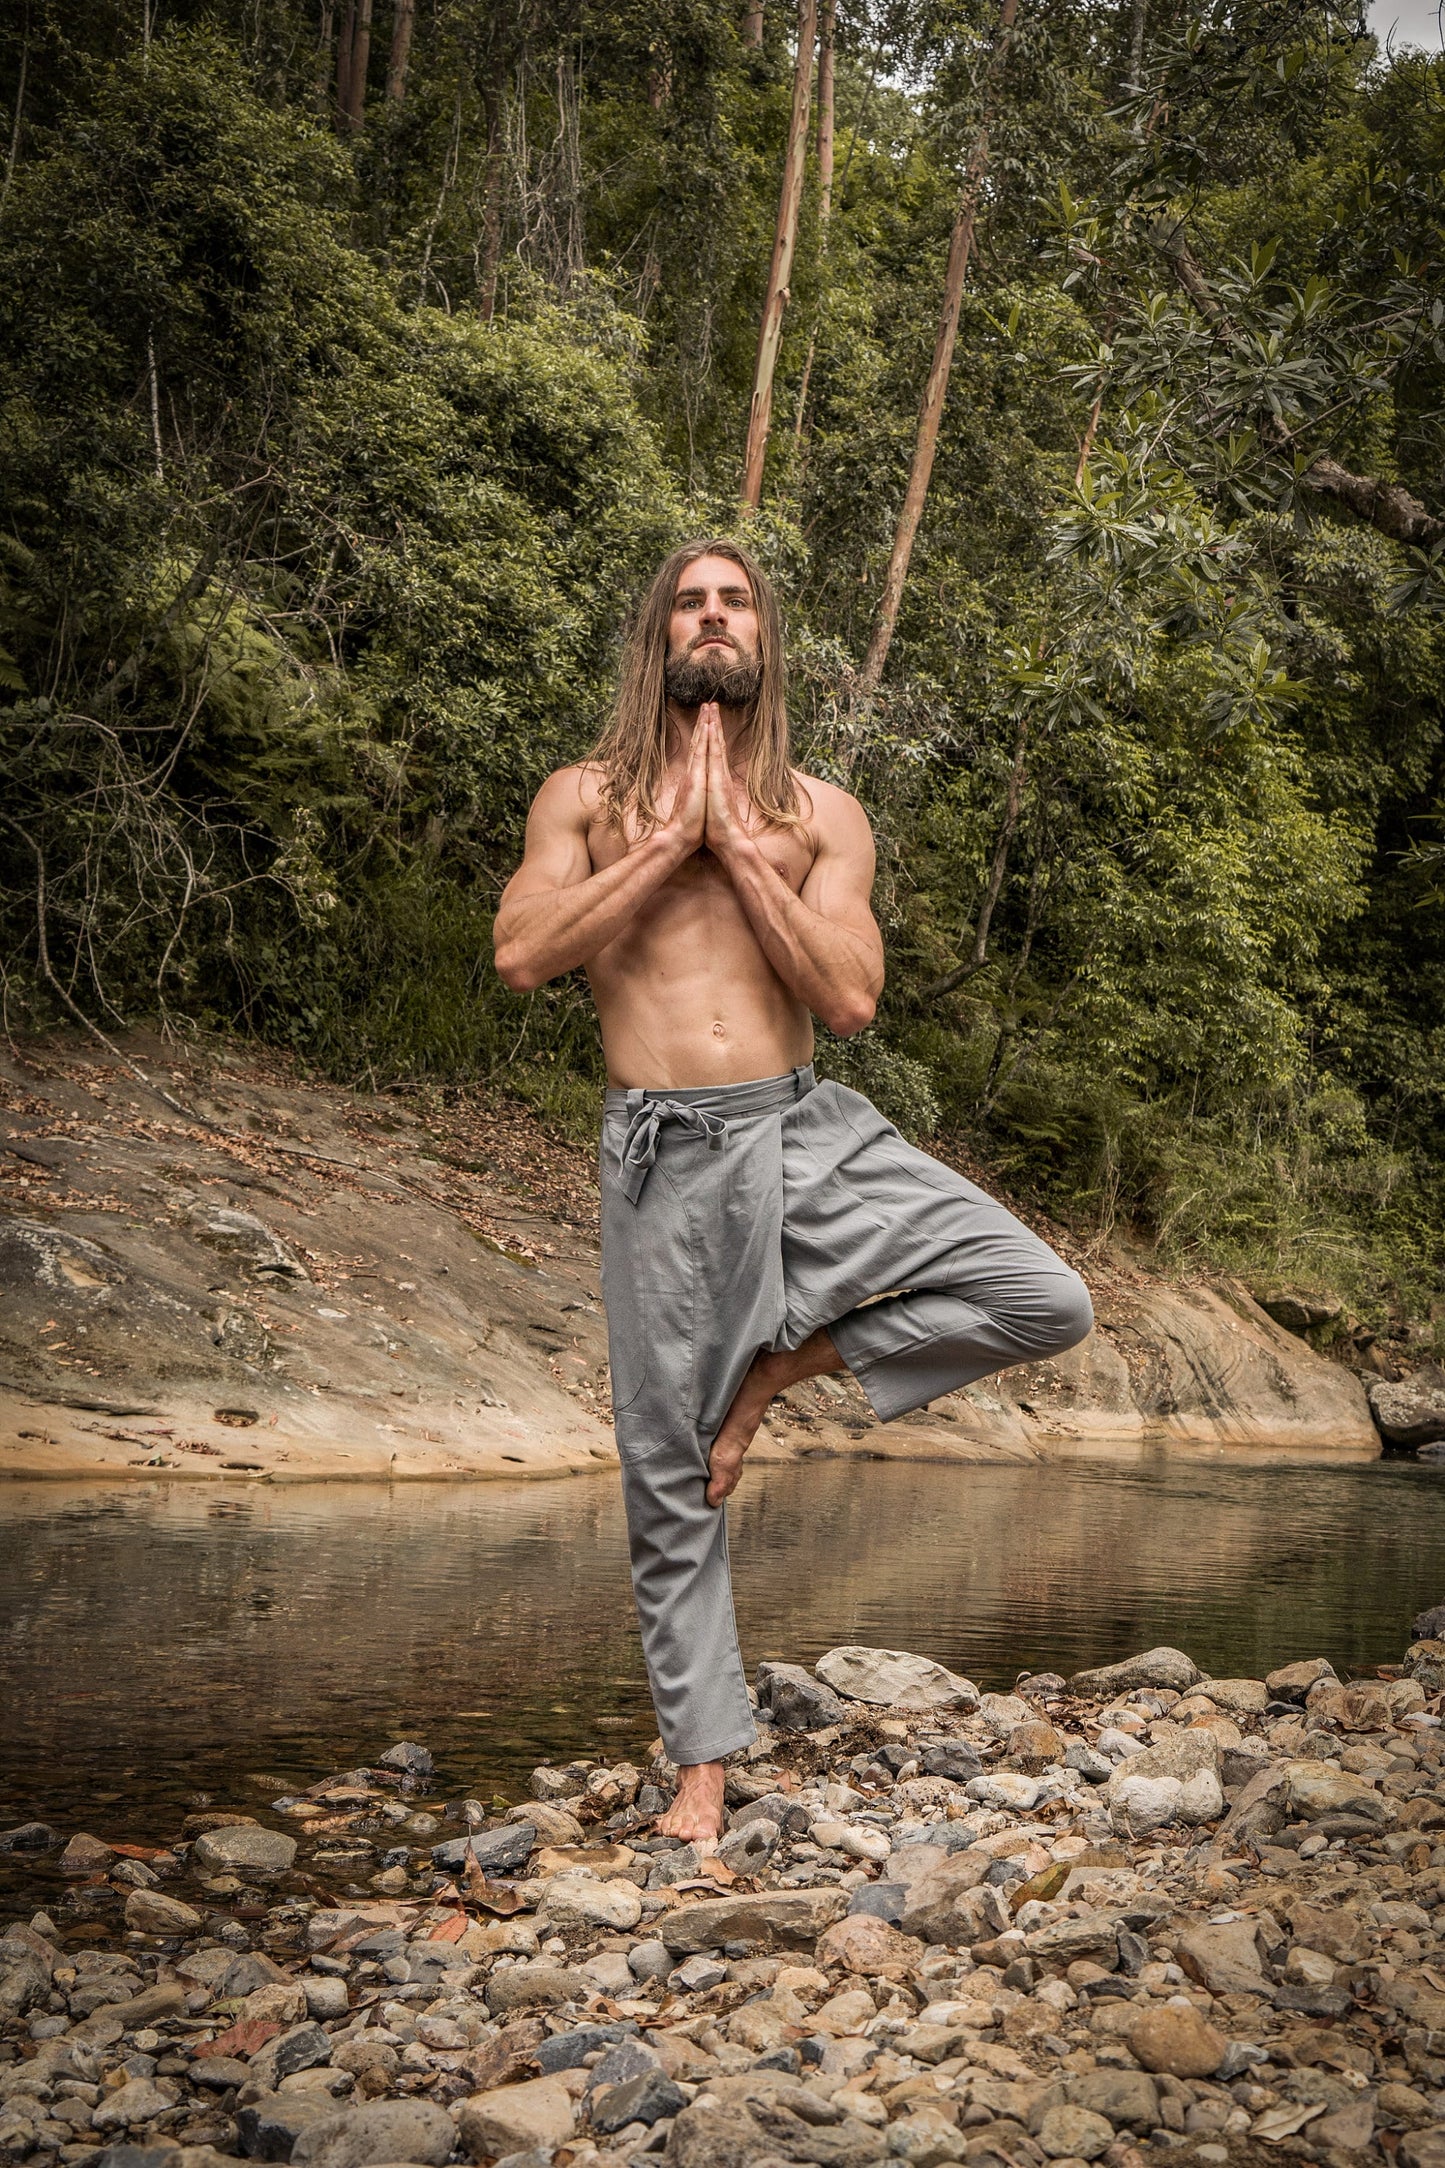 Mens Grey Cotton Pants Drop Crotch Harem Alibaba Yoga Comfortable Breathable One Size Loose Fit Festival Boho Hippie Natural Earthy AJJAYA